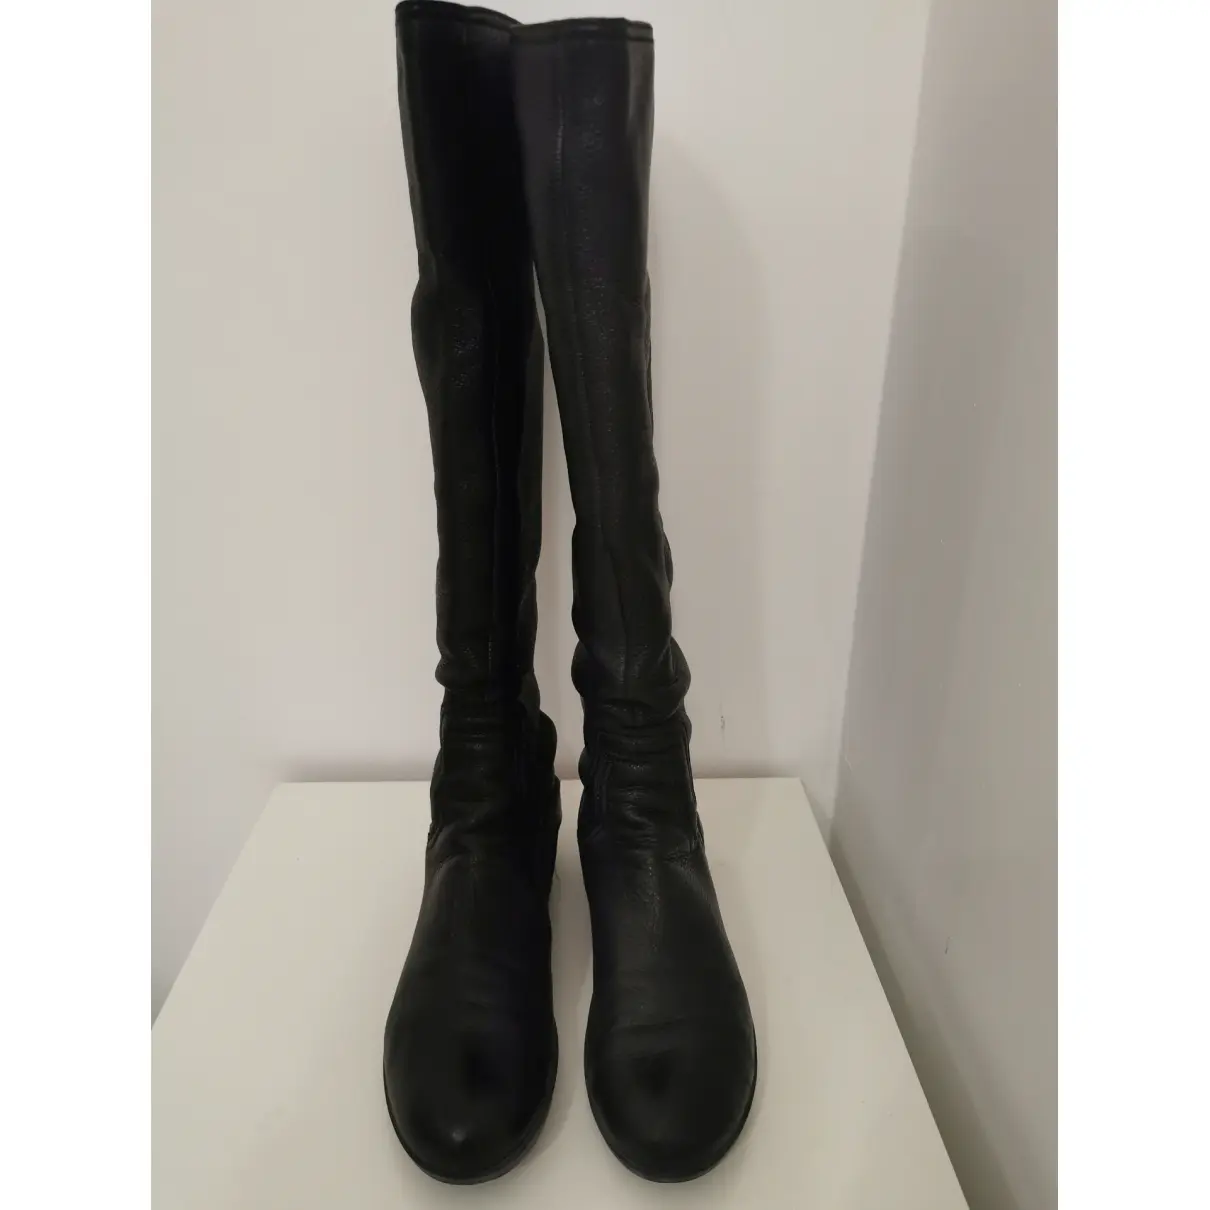 Buy Miu Miu Leather boots online